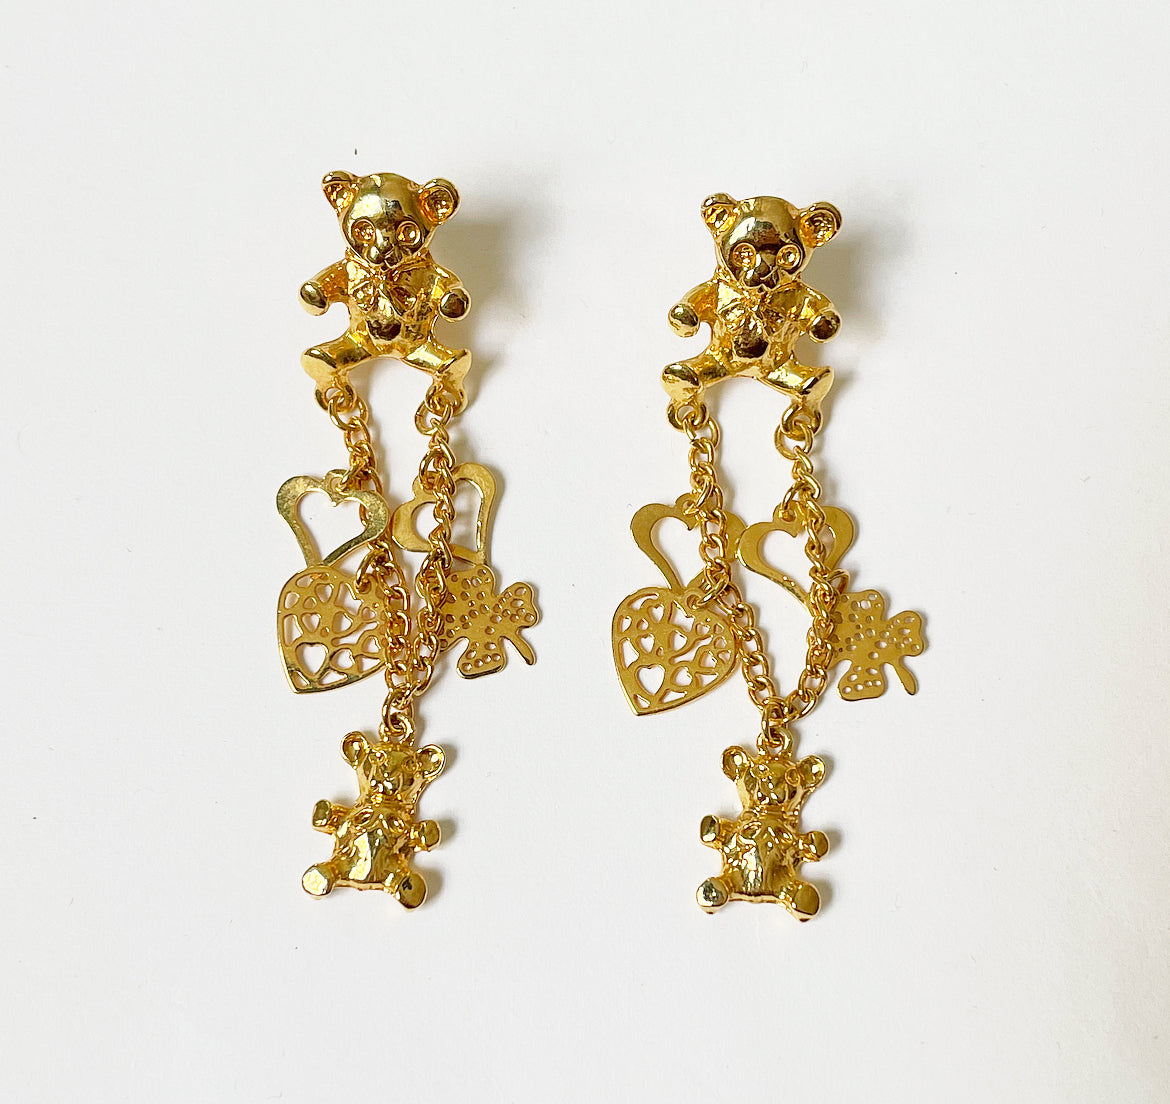 Vintage bear charm earrings